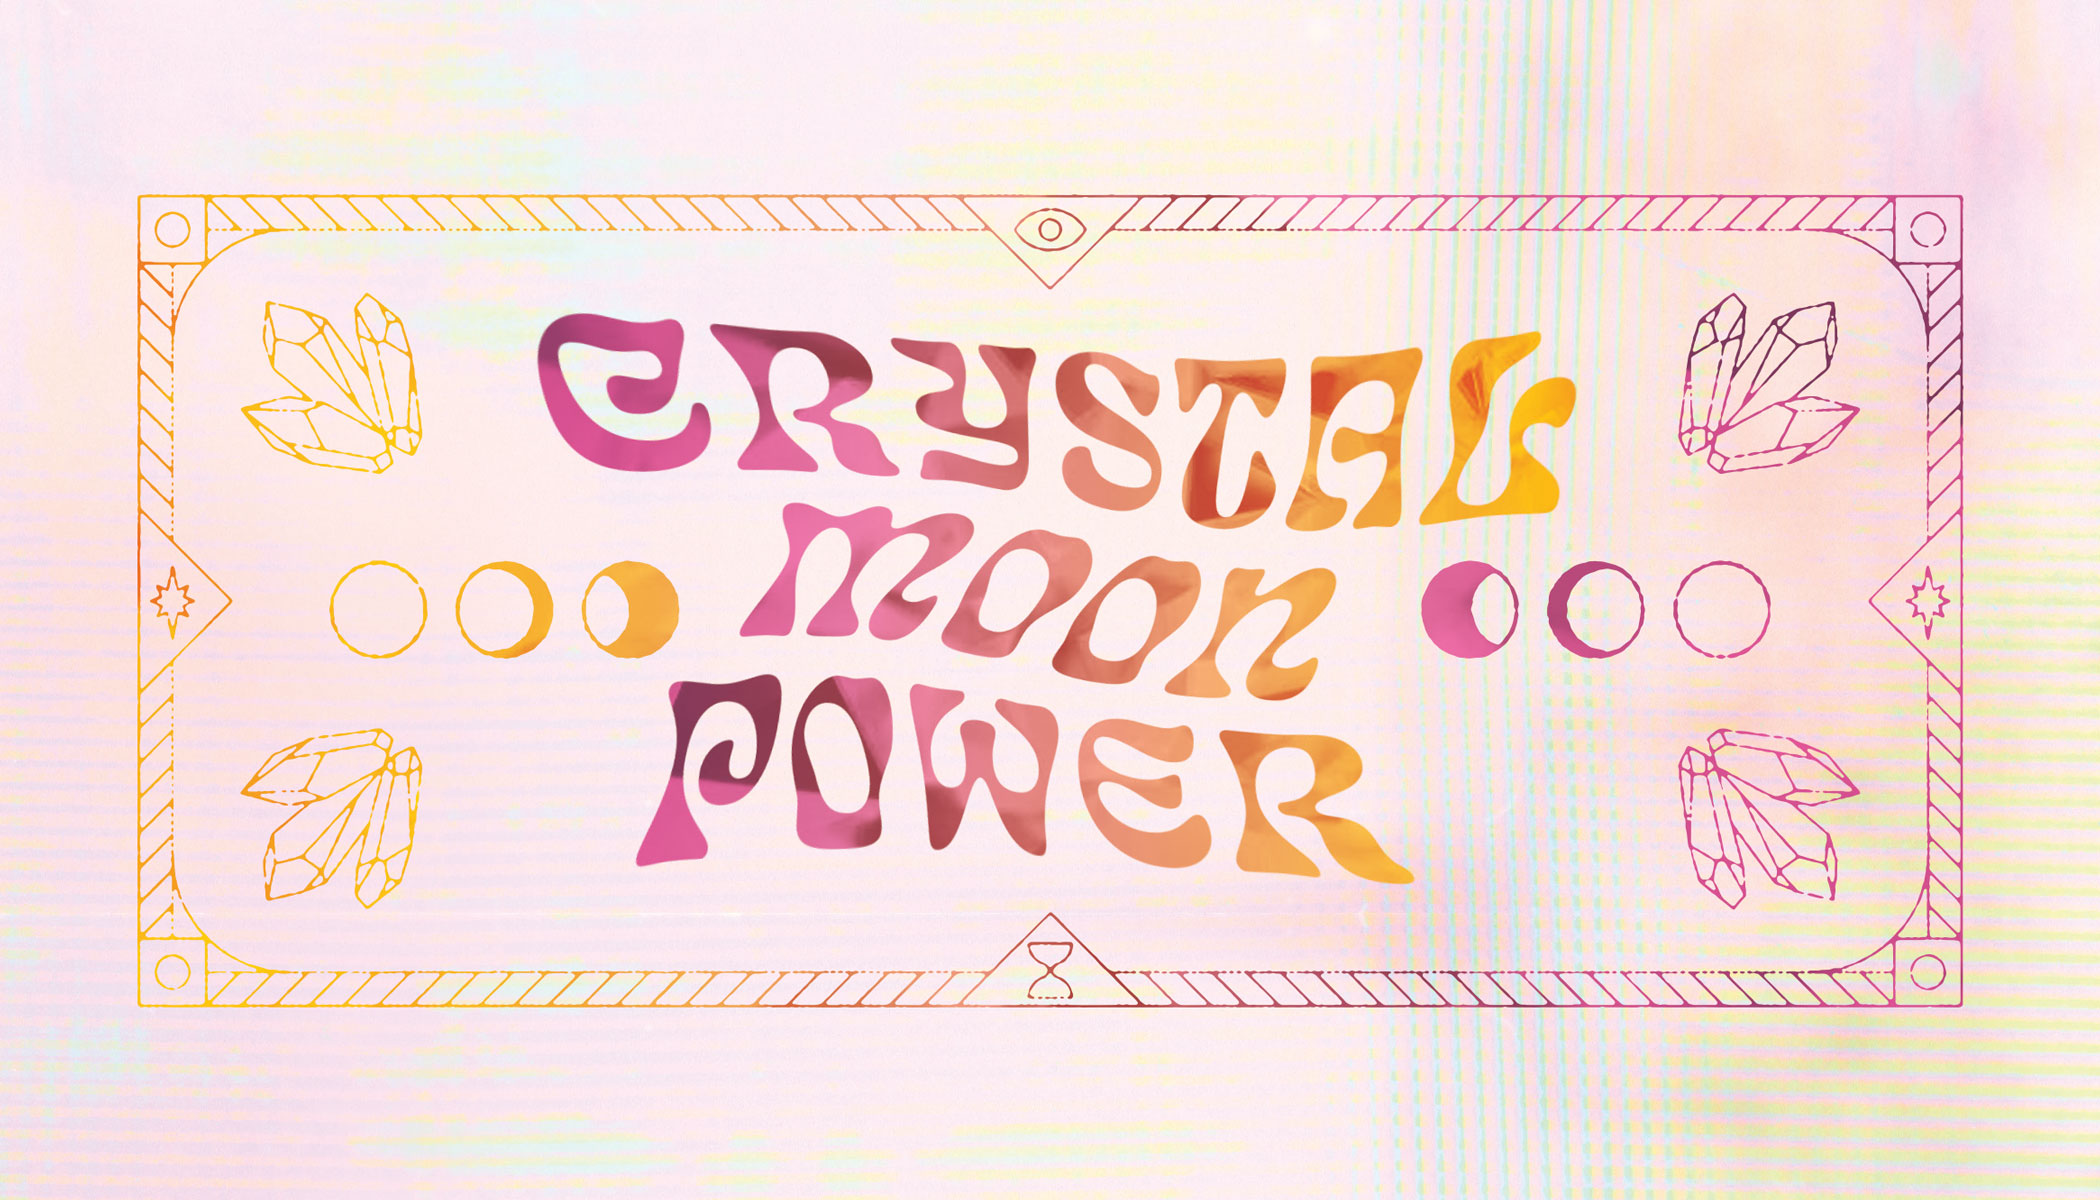 Crystal Moon Power